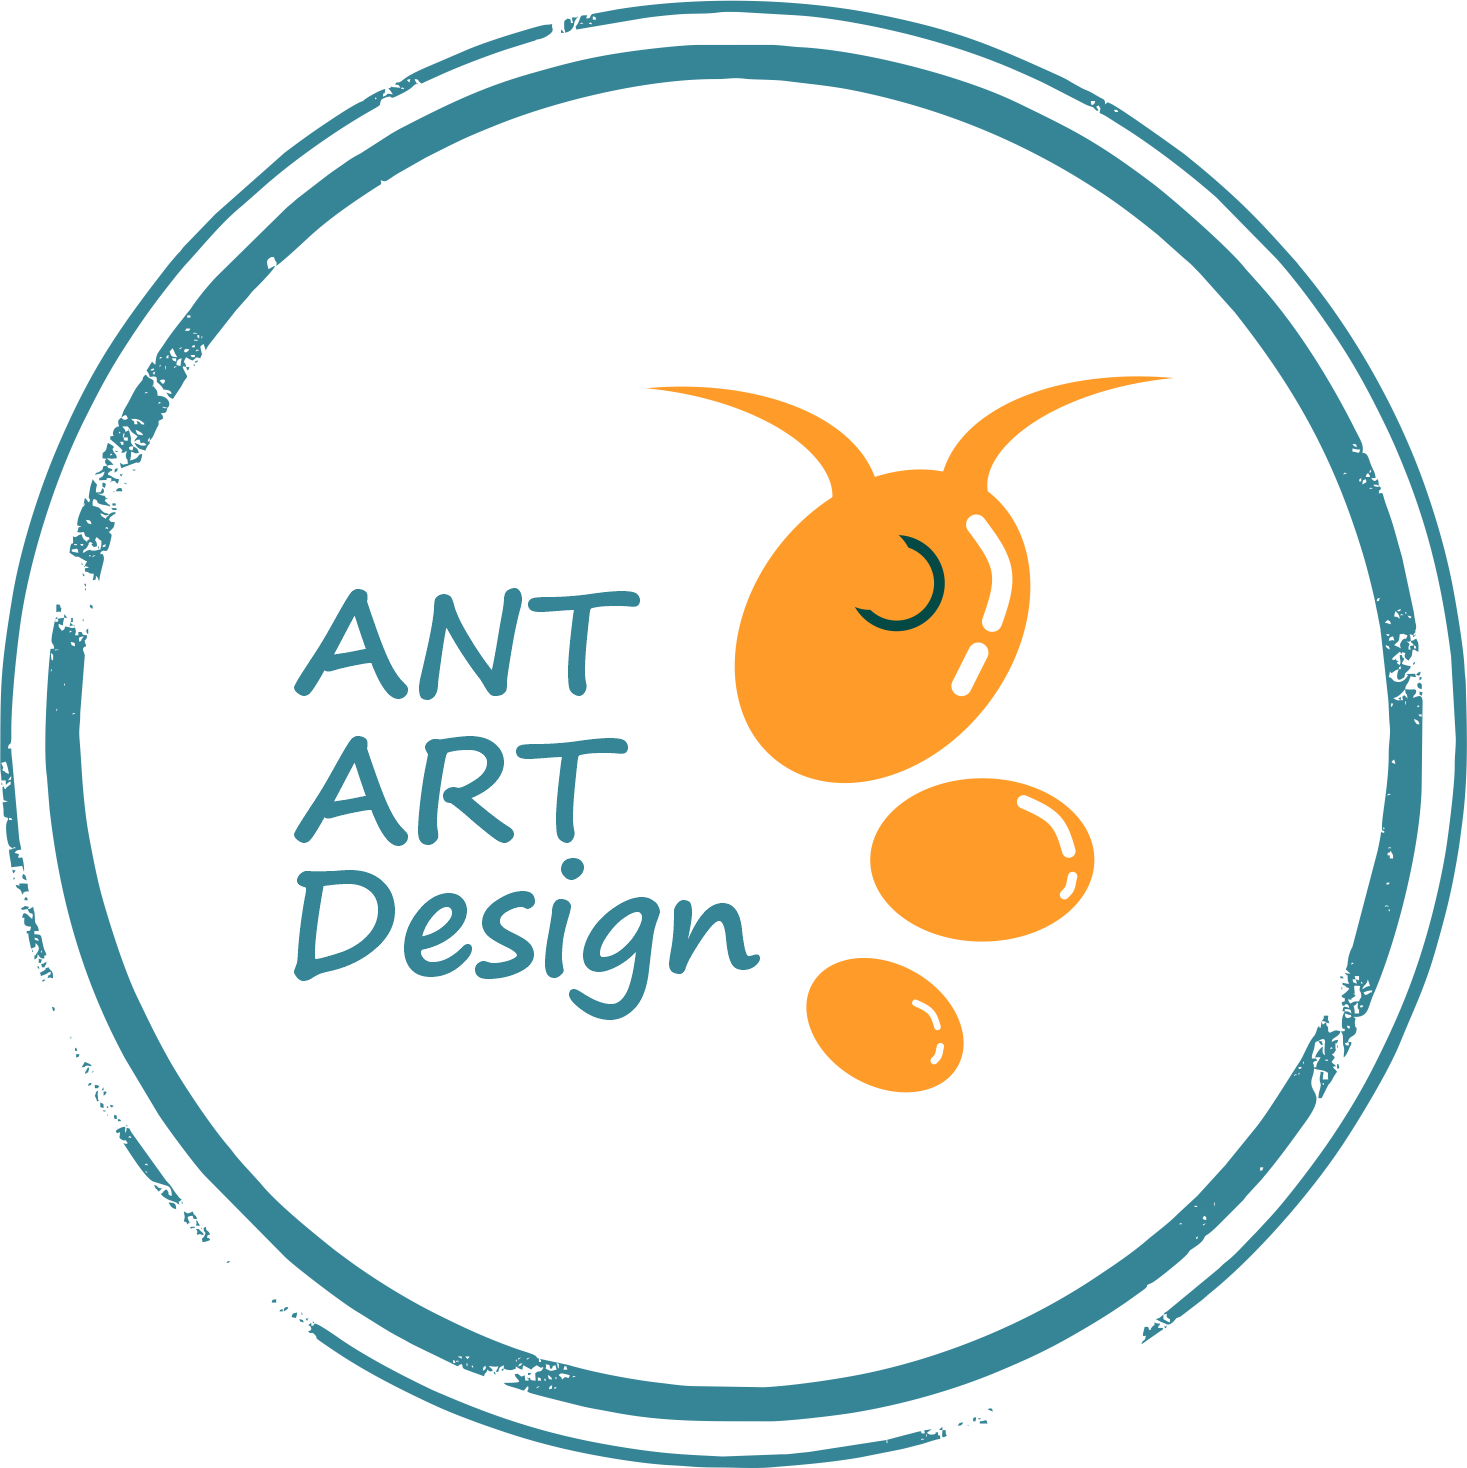 AntArt Design